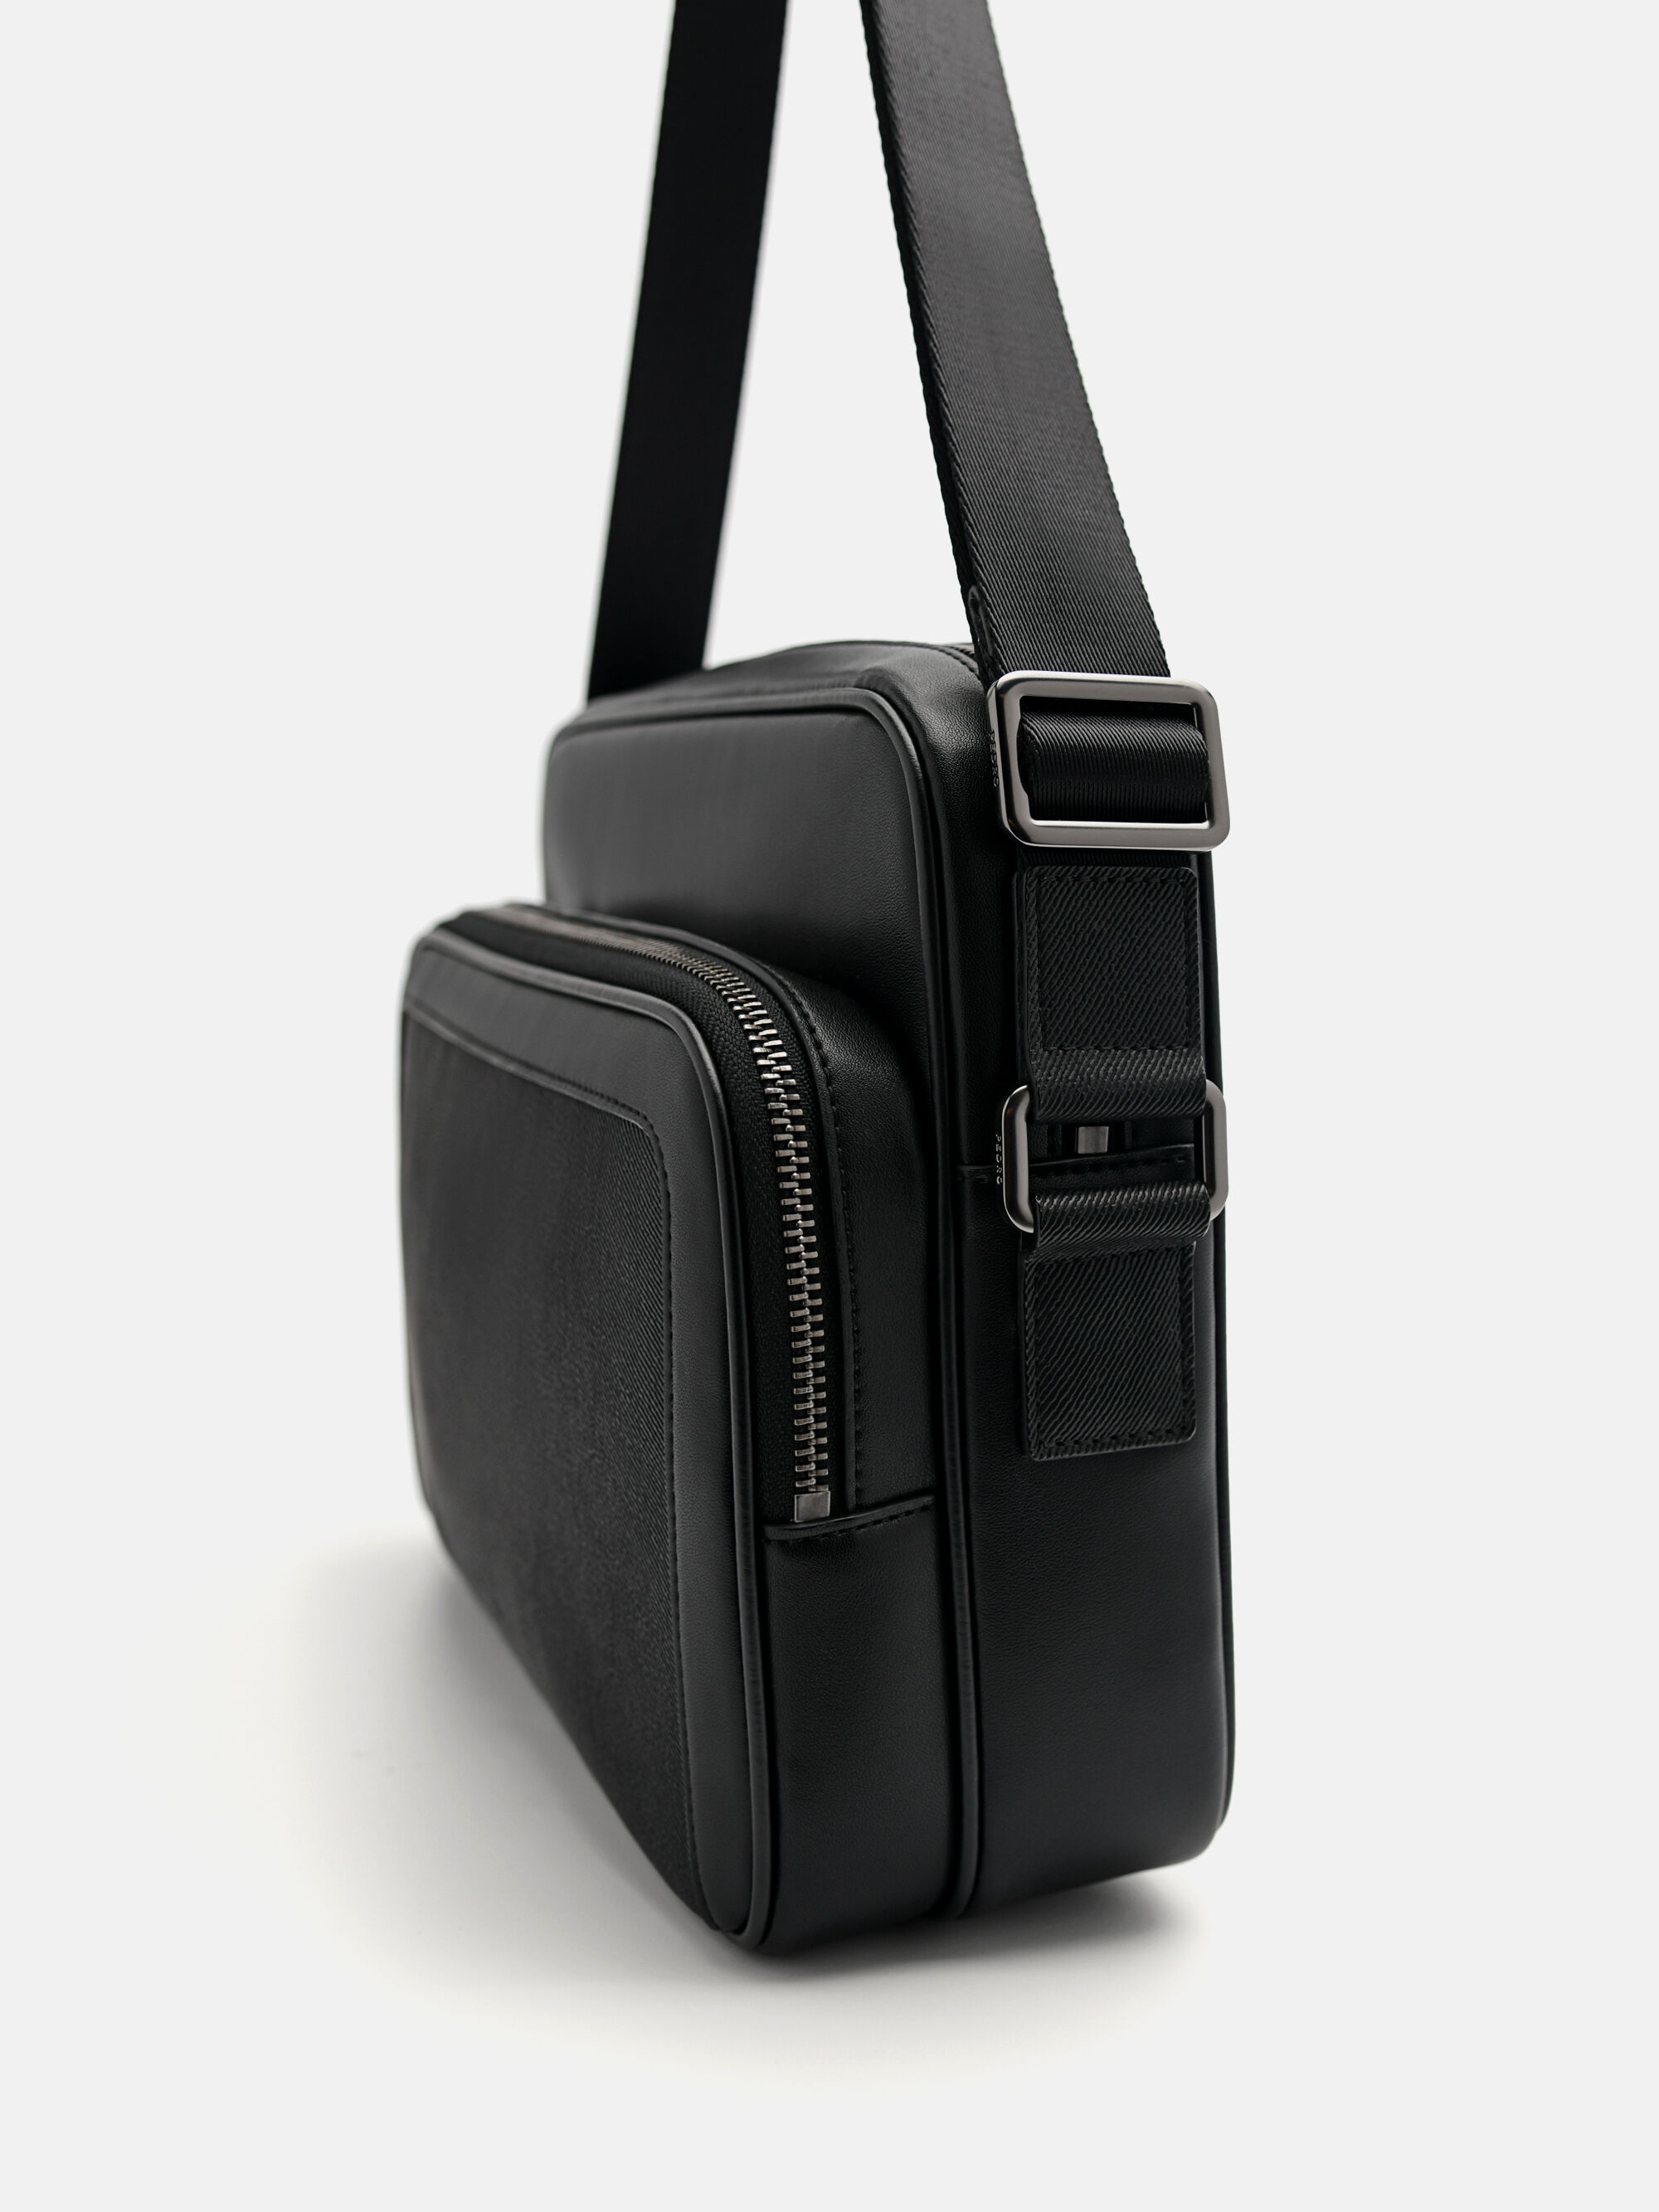 Porte Messenger Bag, Black